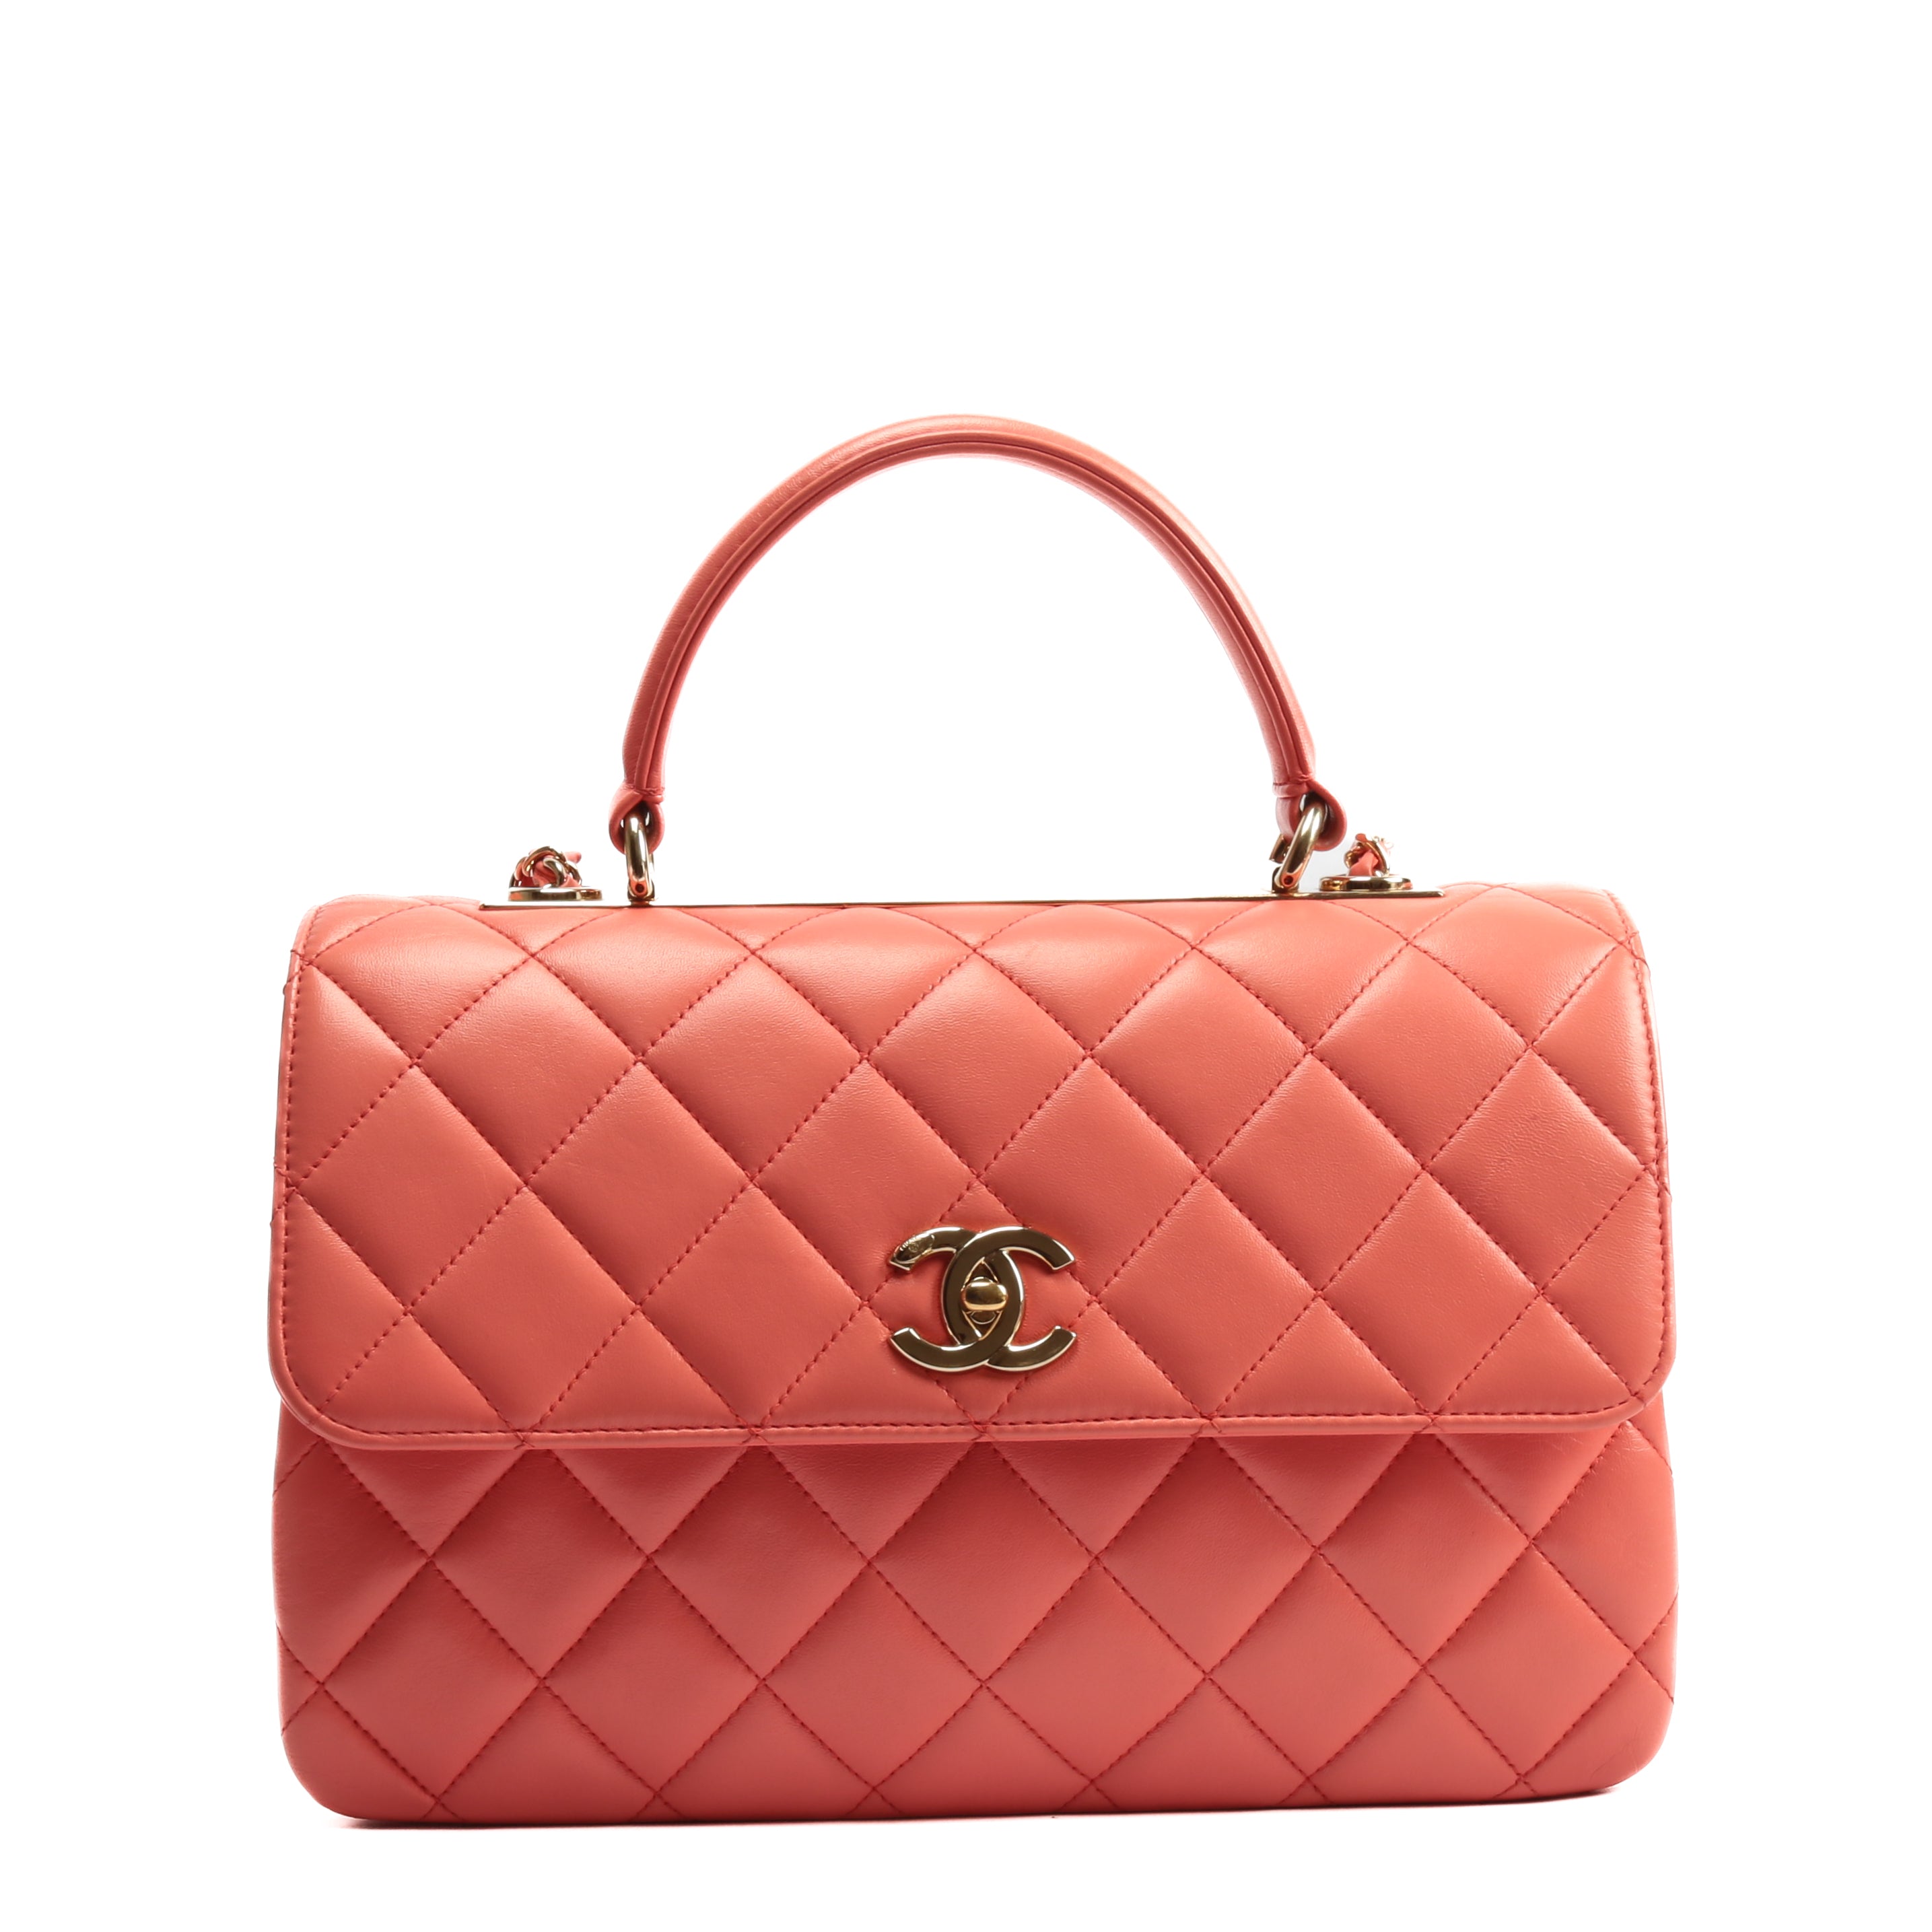 Chanel Trendy Cc Bag - 26 For Sale on 1stDibs